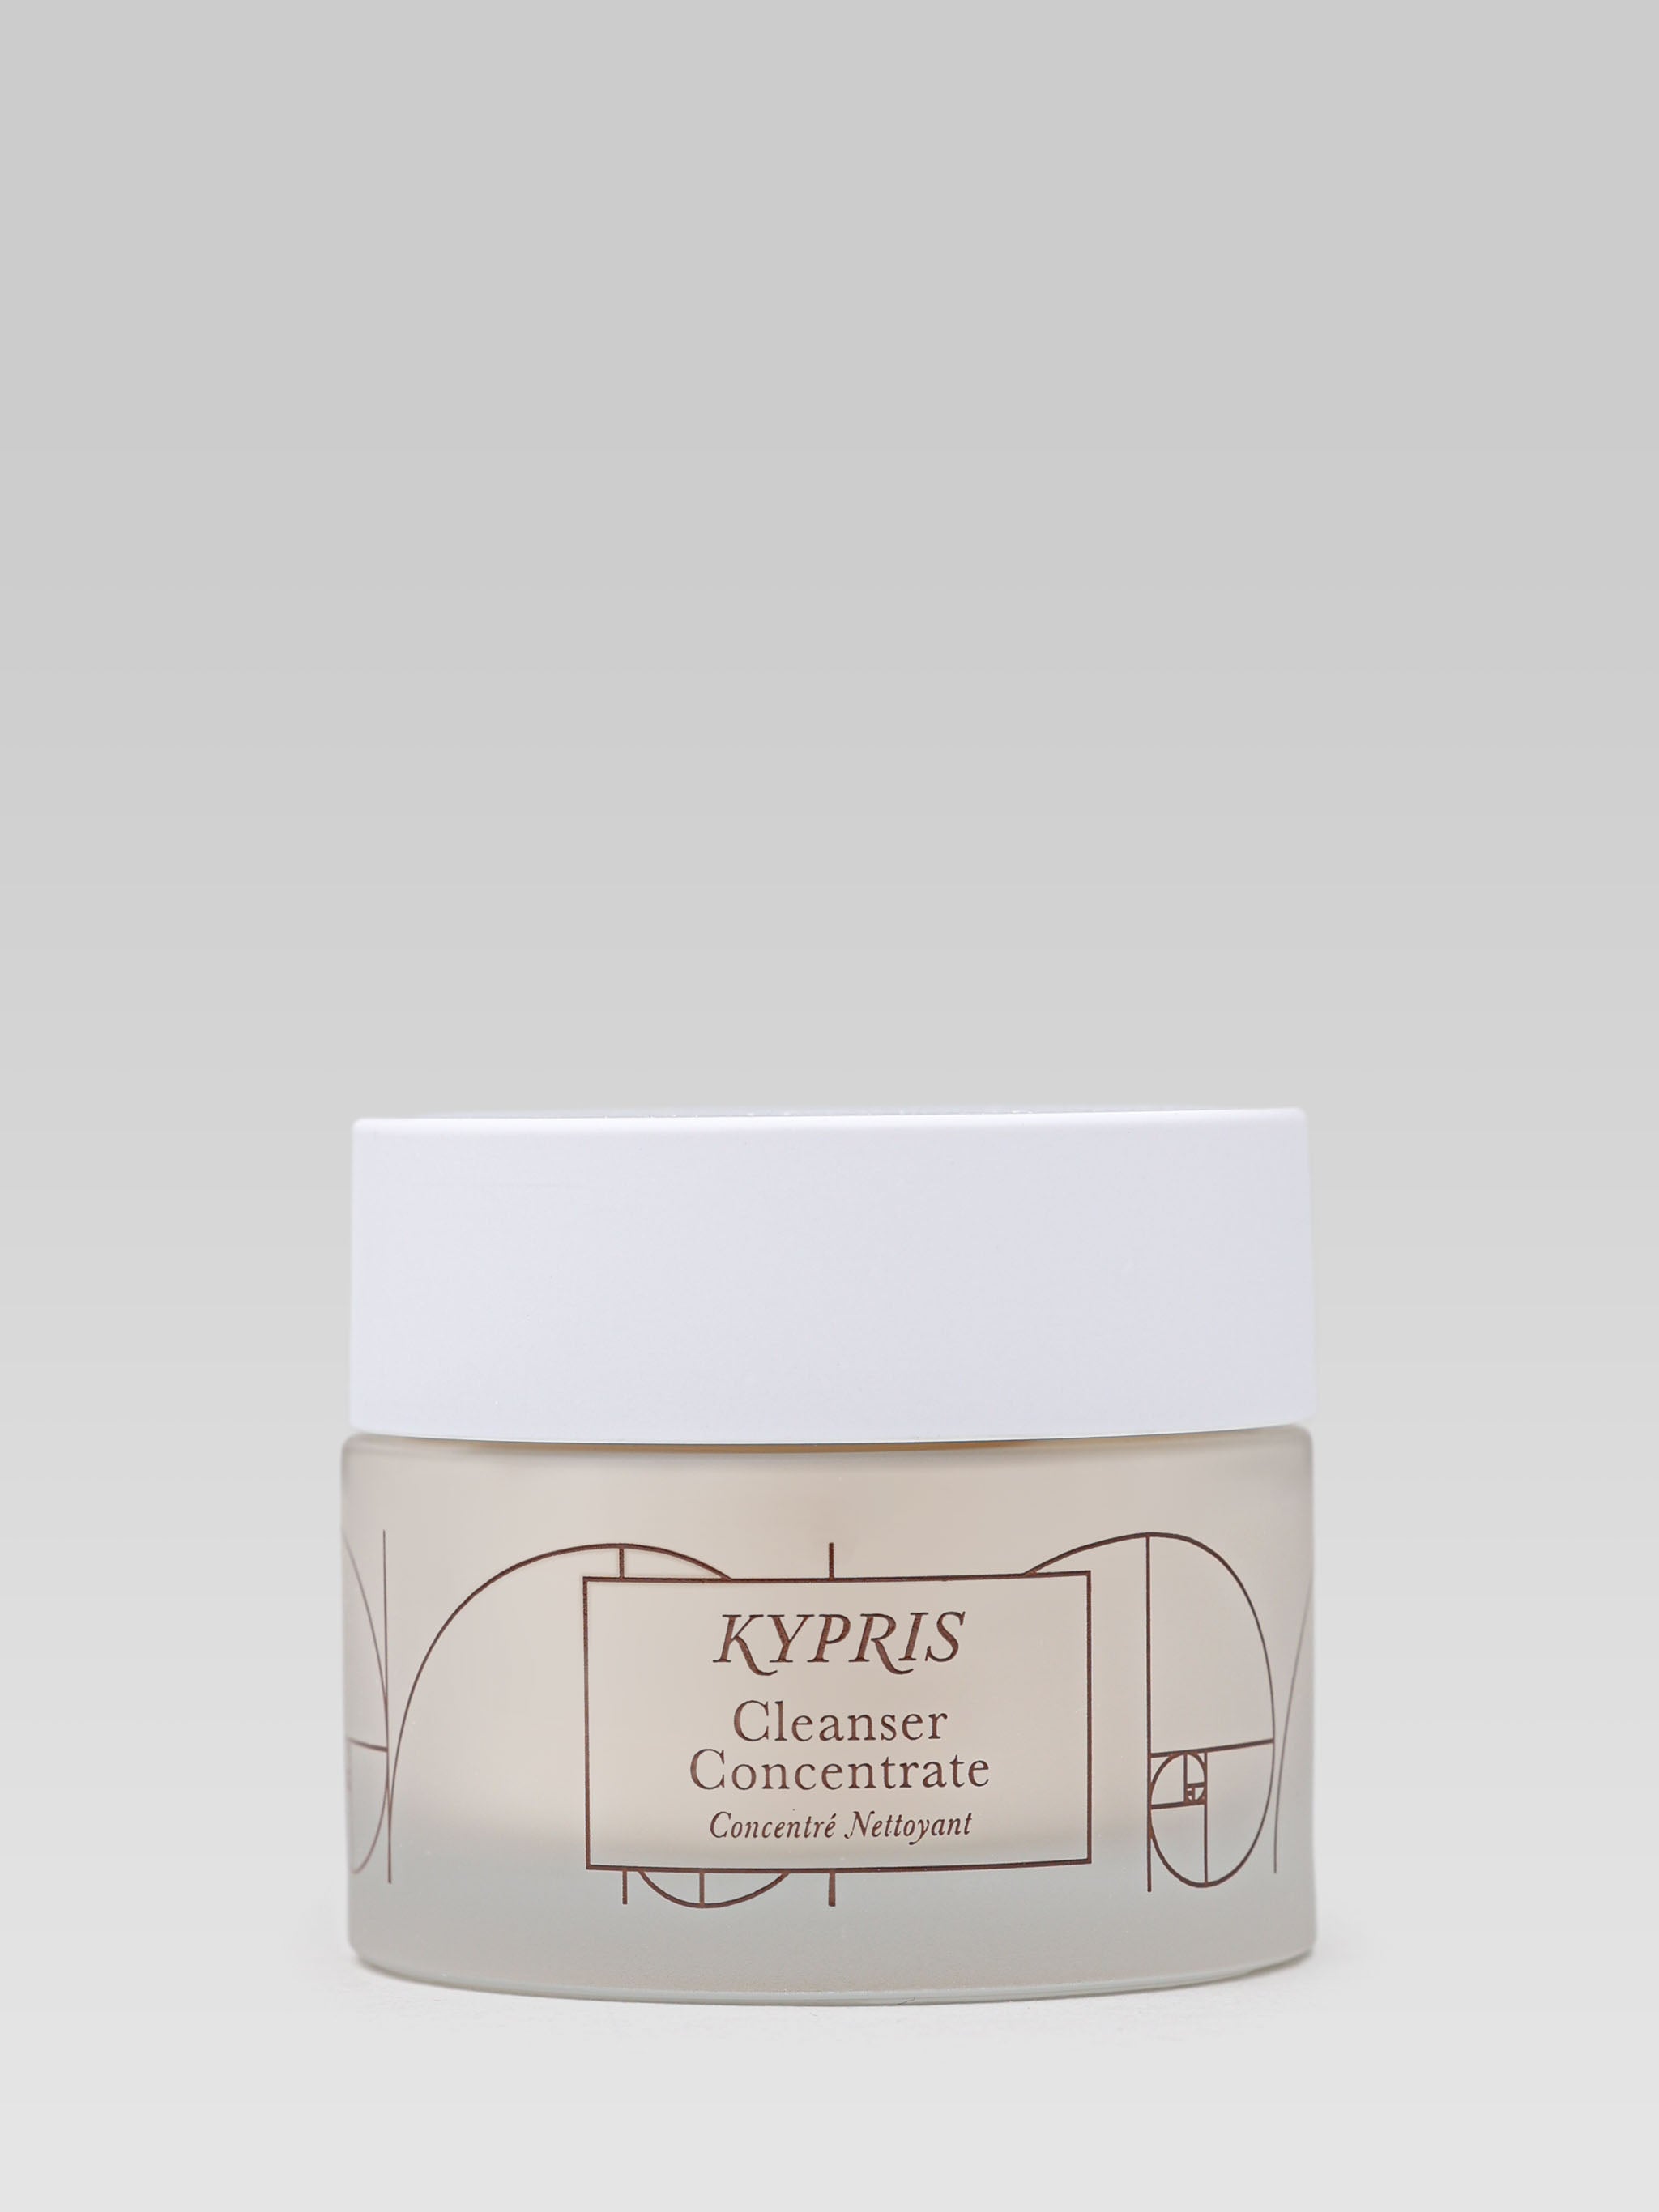 KYPRIS Cleanser Concentrate Gesichtsreiniger product shot 